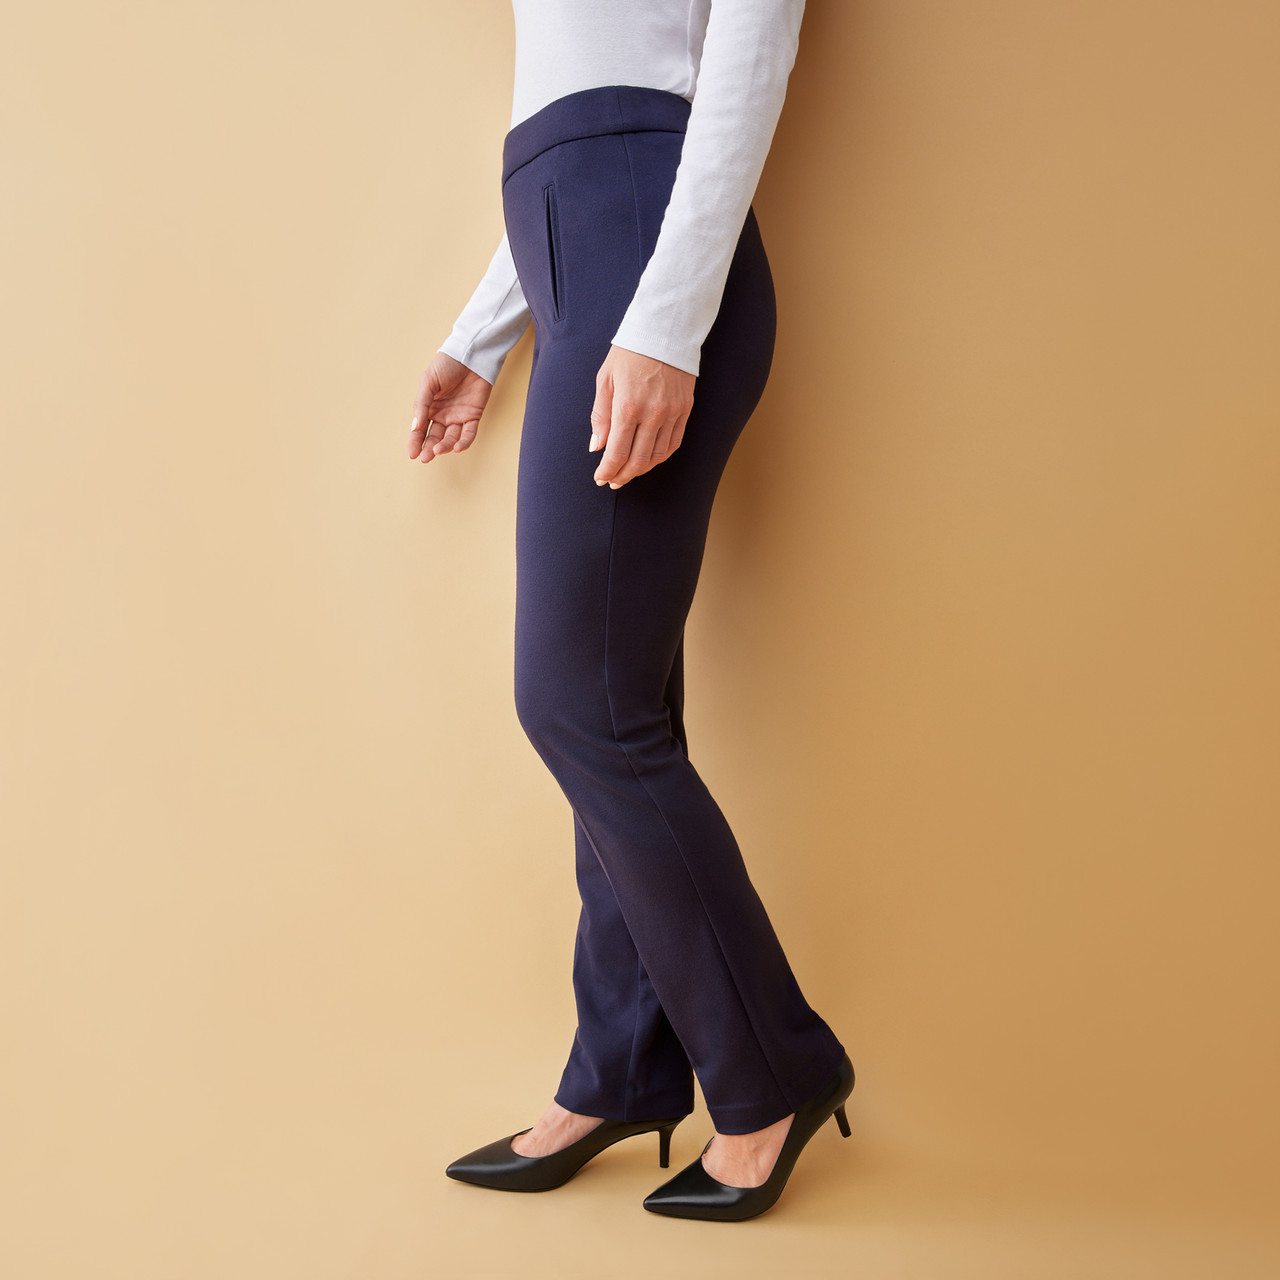 Jarbo womens size Medium ponte knit pants black 25” inseam Elastic Waist t19